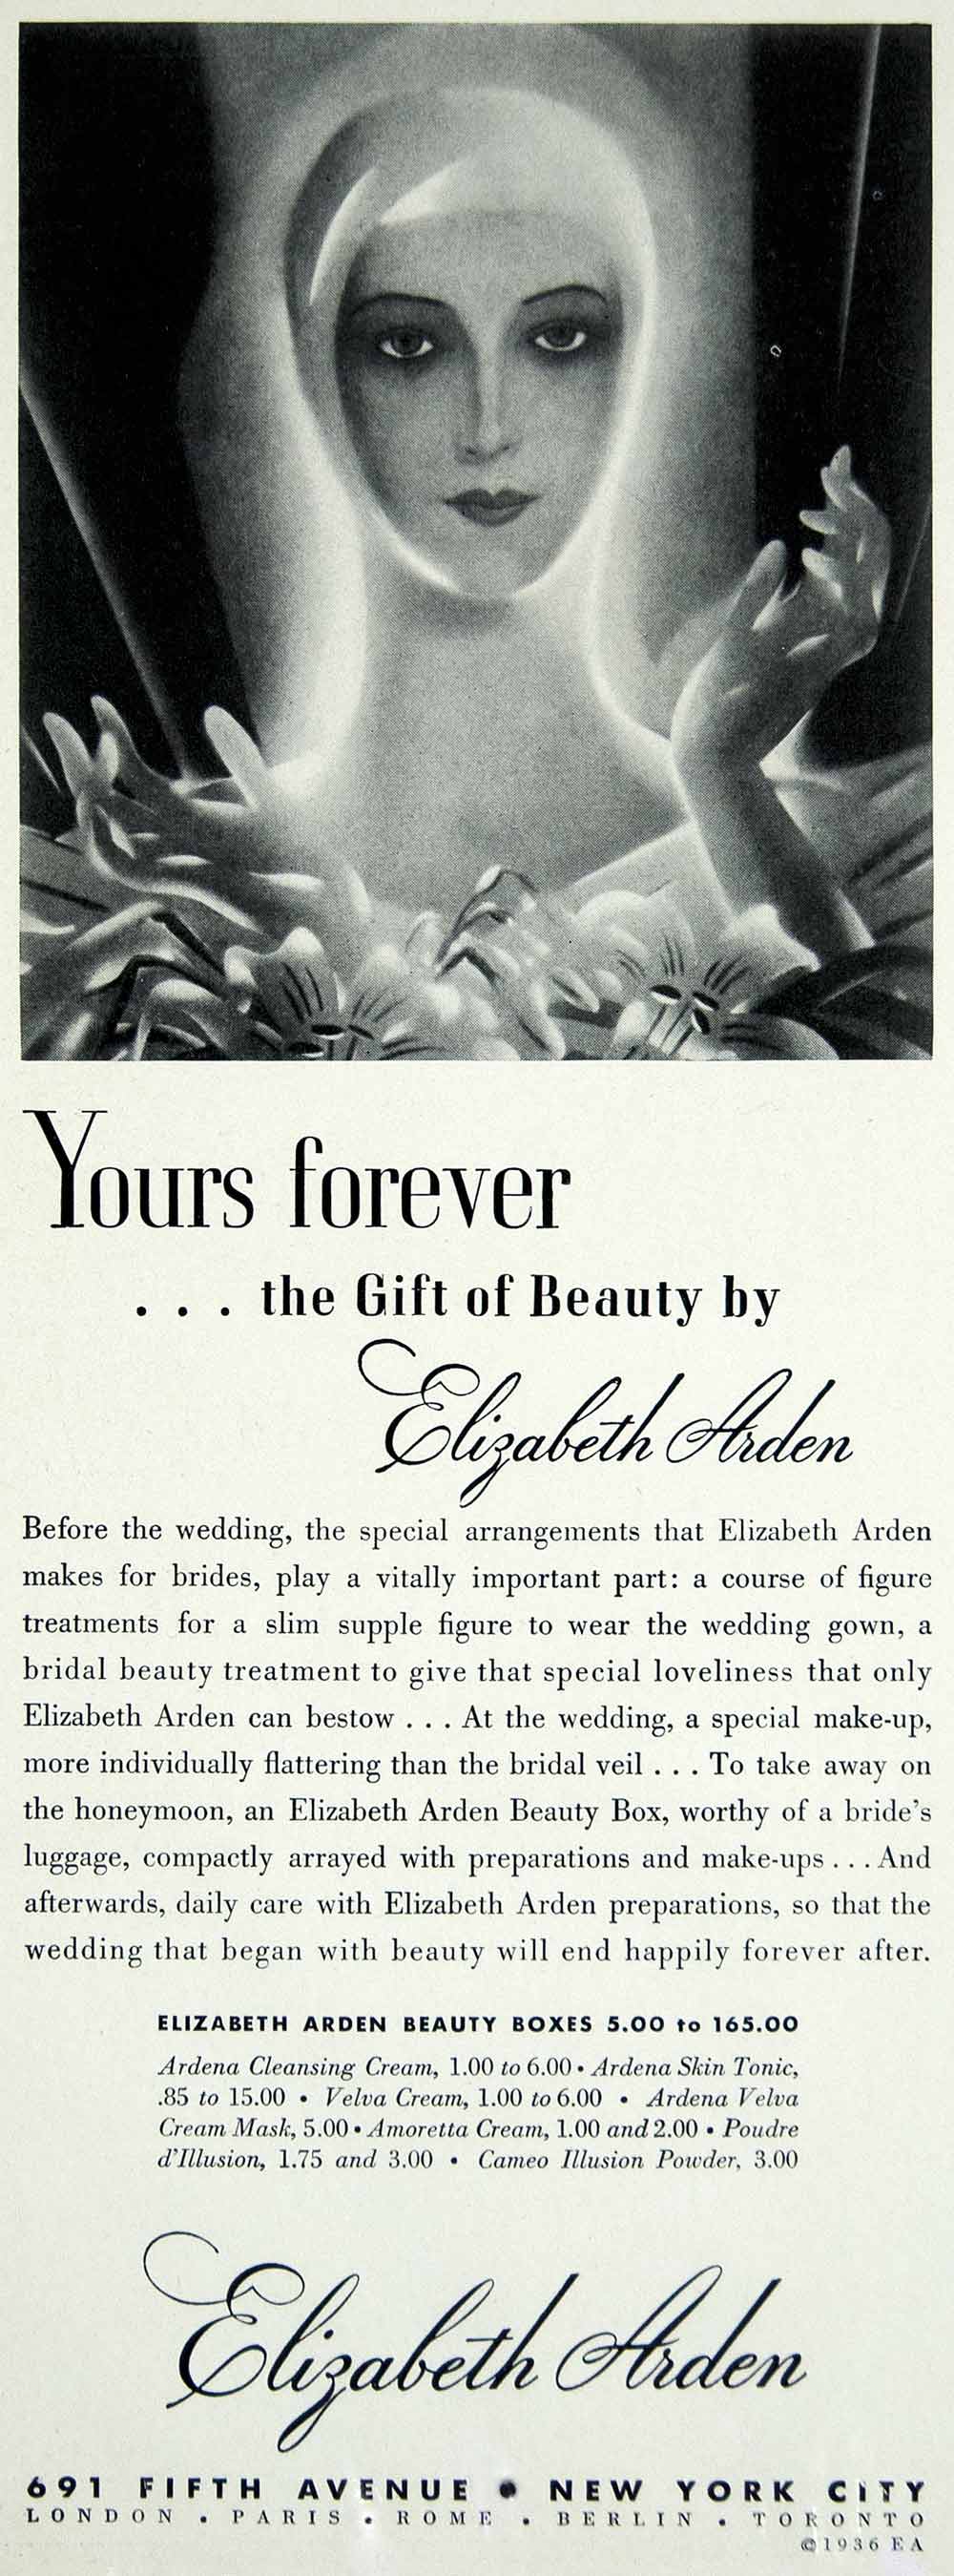 1949 Ad Elizabeth Arden Beauty Box Bride Honeymoon Art Deco Illustration YBSM1